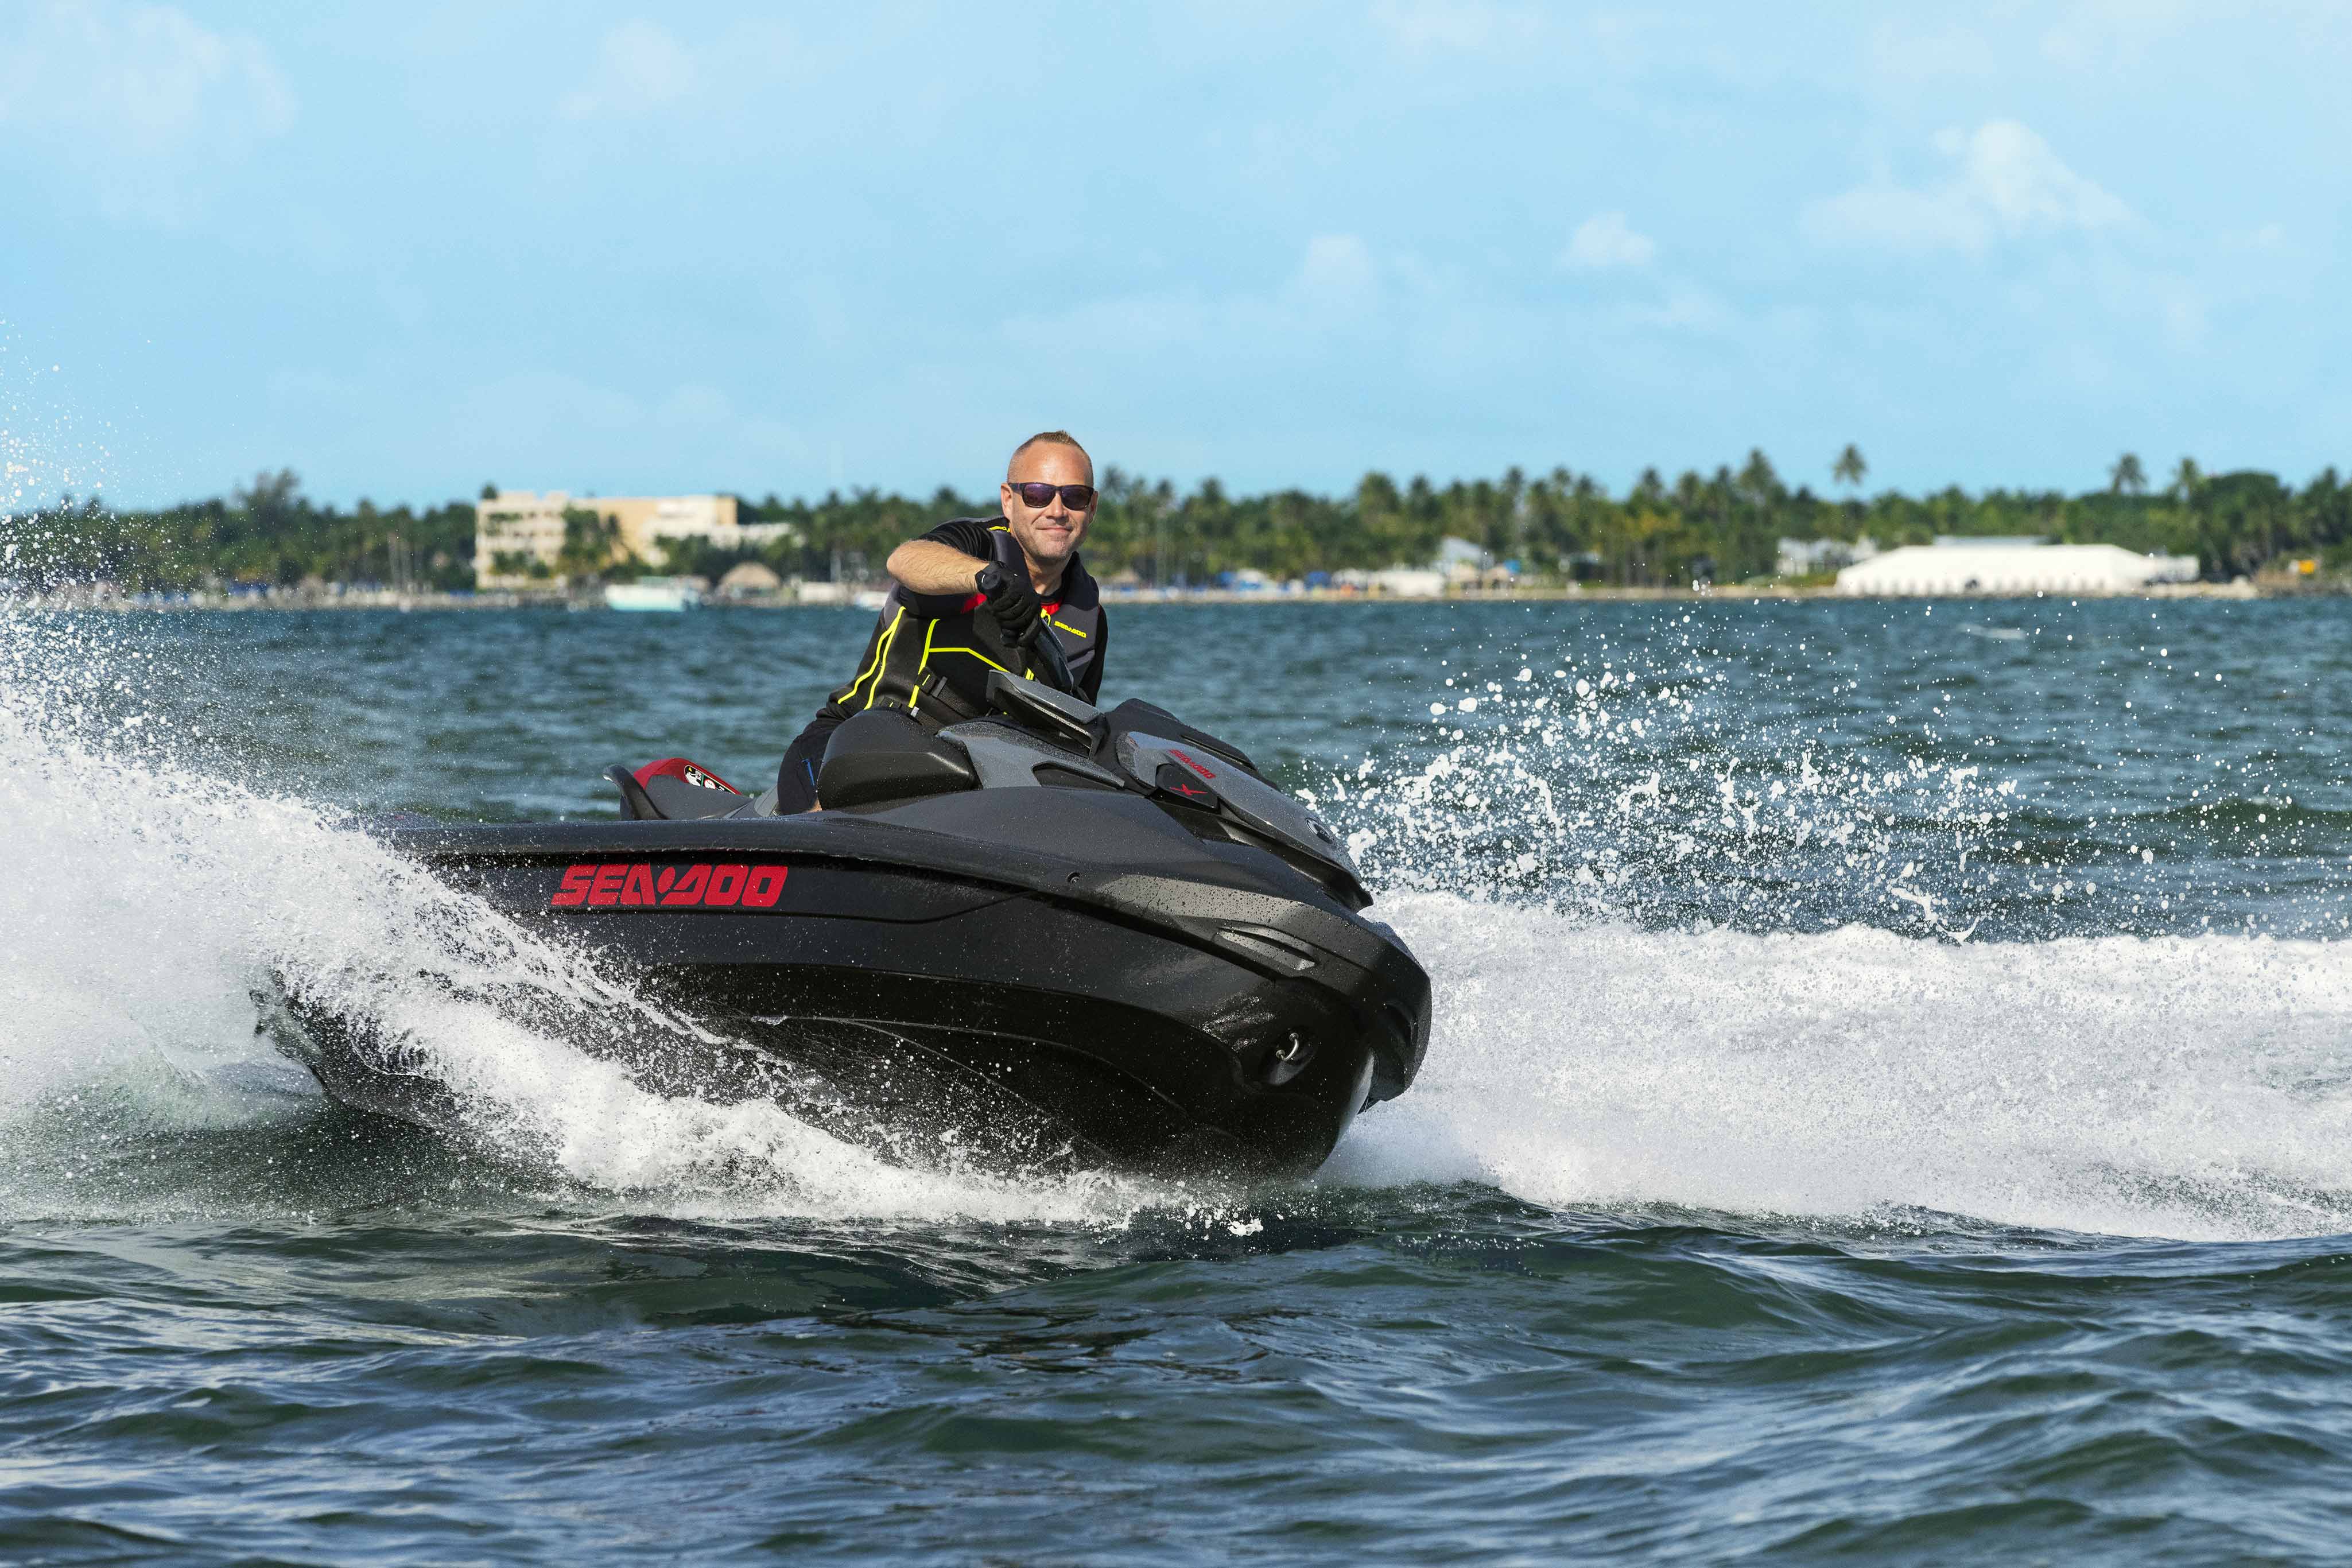 Man riding the Sea-Doo RXP-X 325 personal watercraft